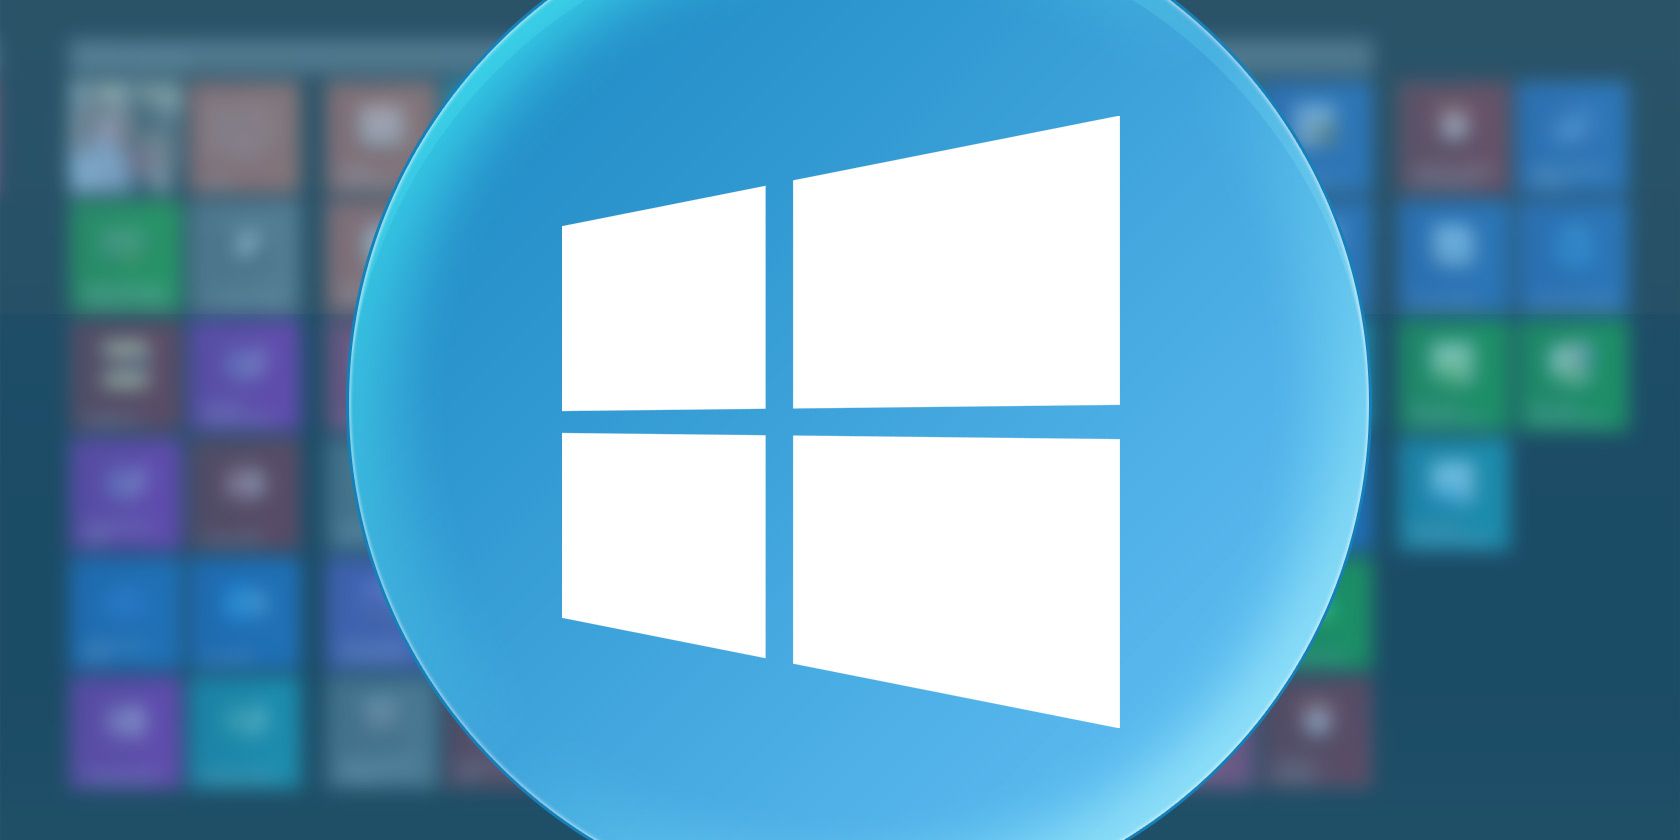 How To Build A Desktop Start Menu Replacement In Windows 8.1